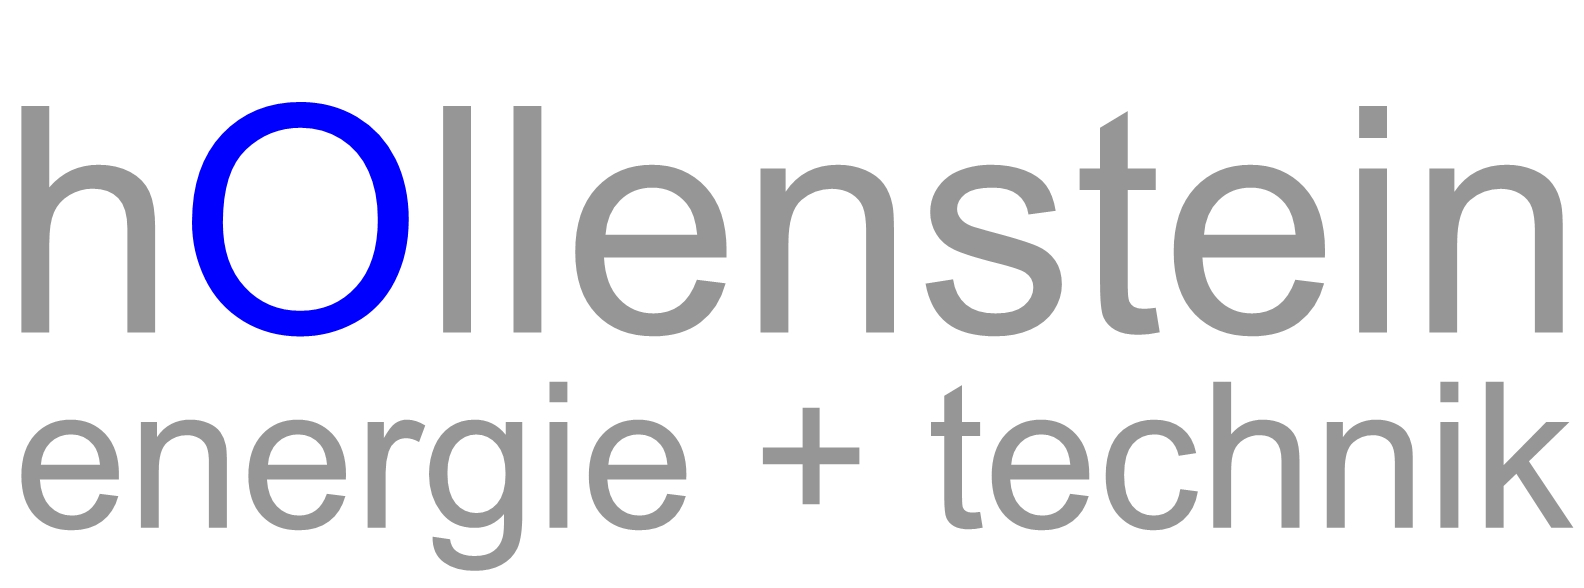 Hollenstein - Energie + Technik